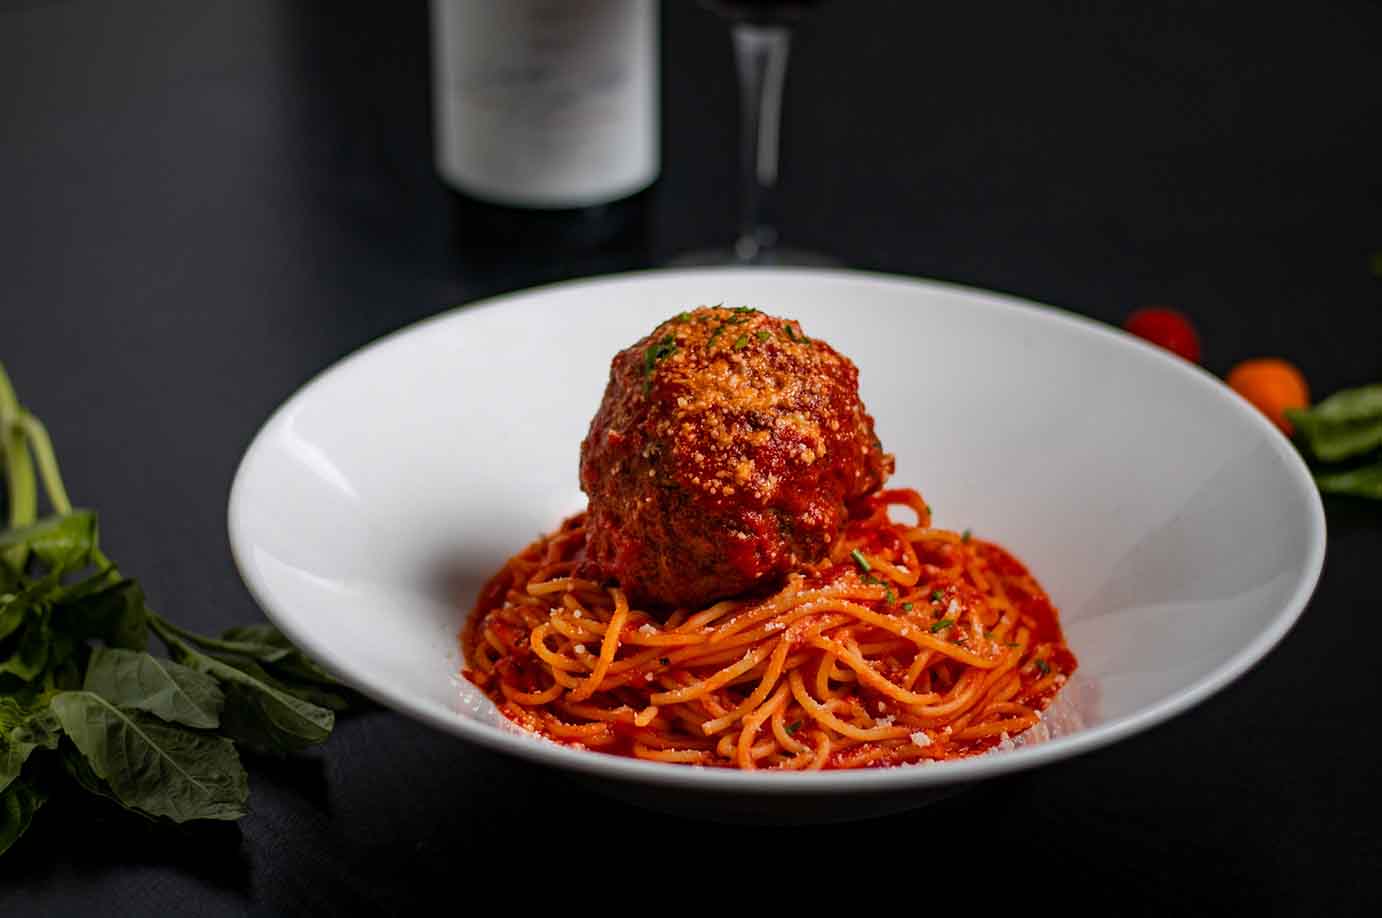 Spaghetti with a giant meatball